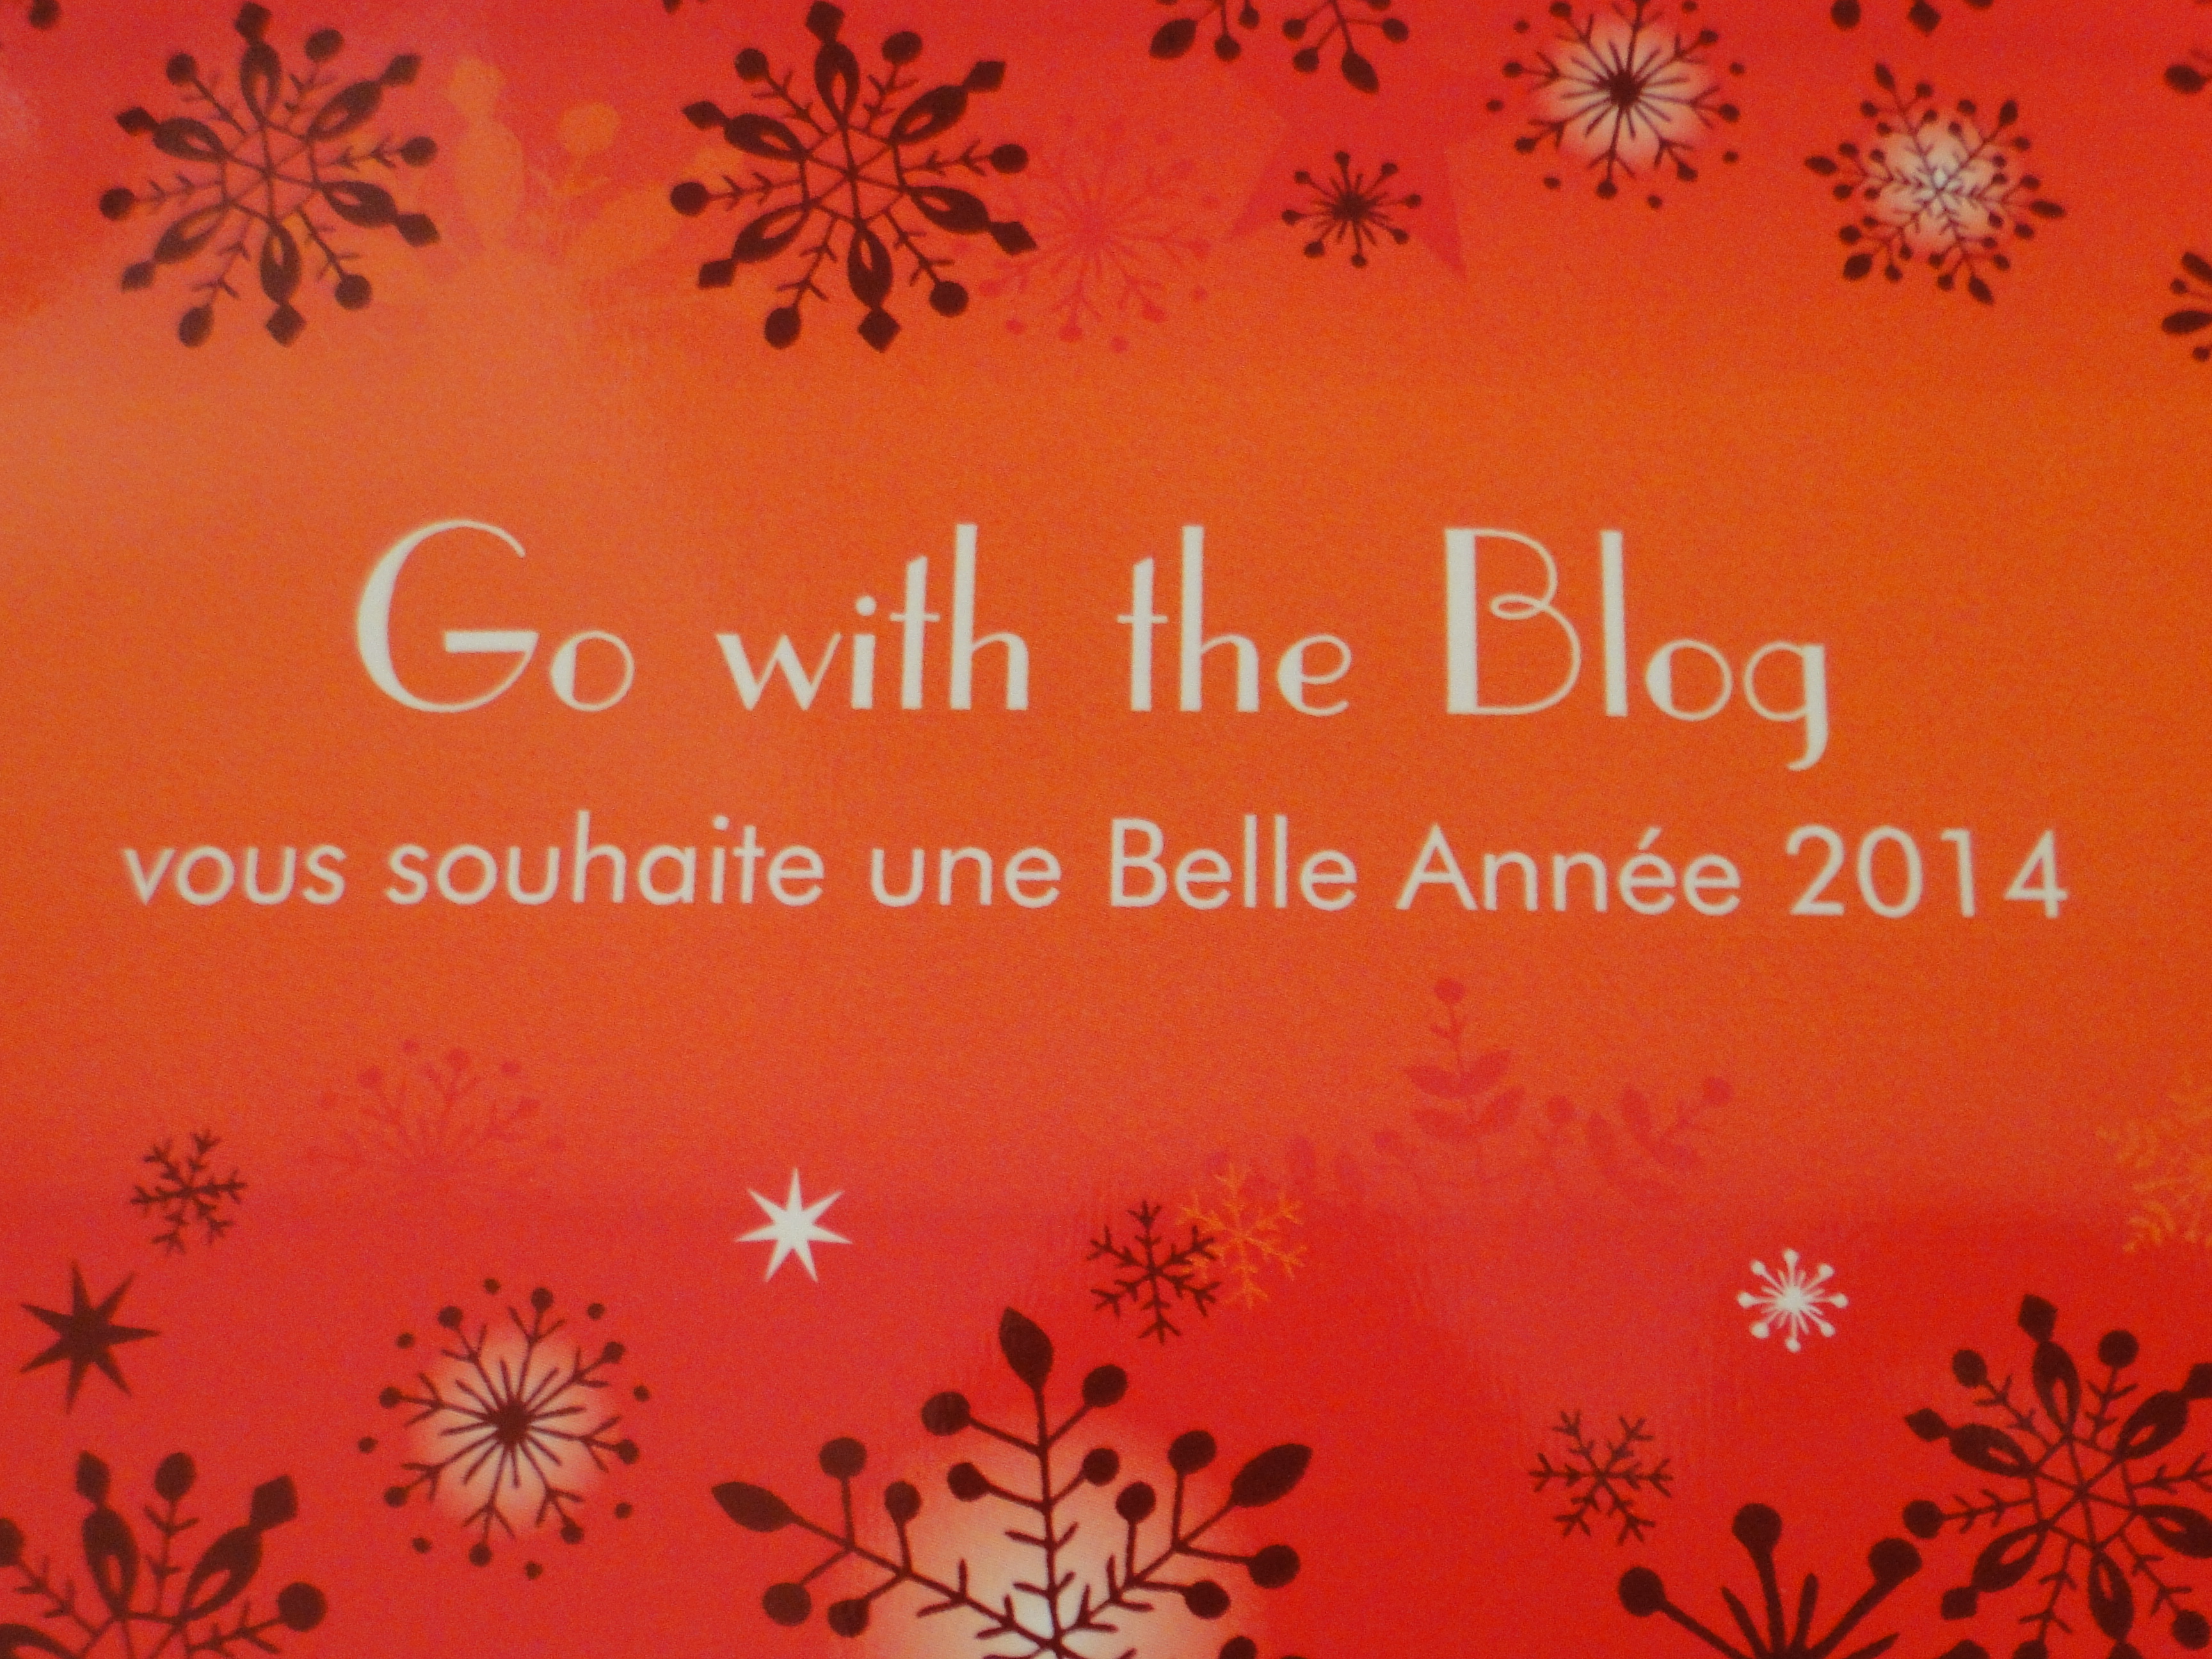 Go with the Blog - bonne Année 2014